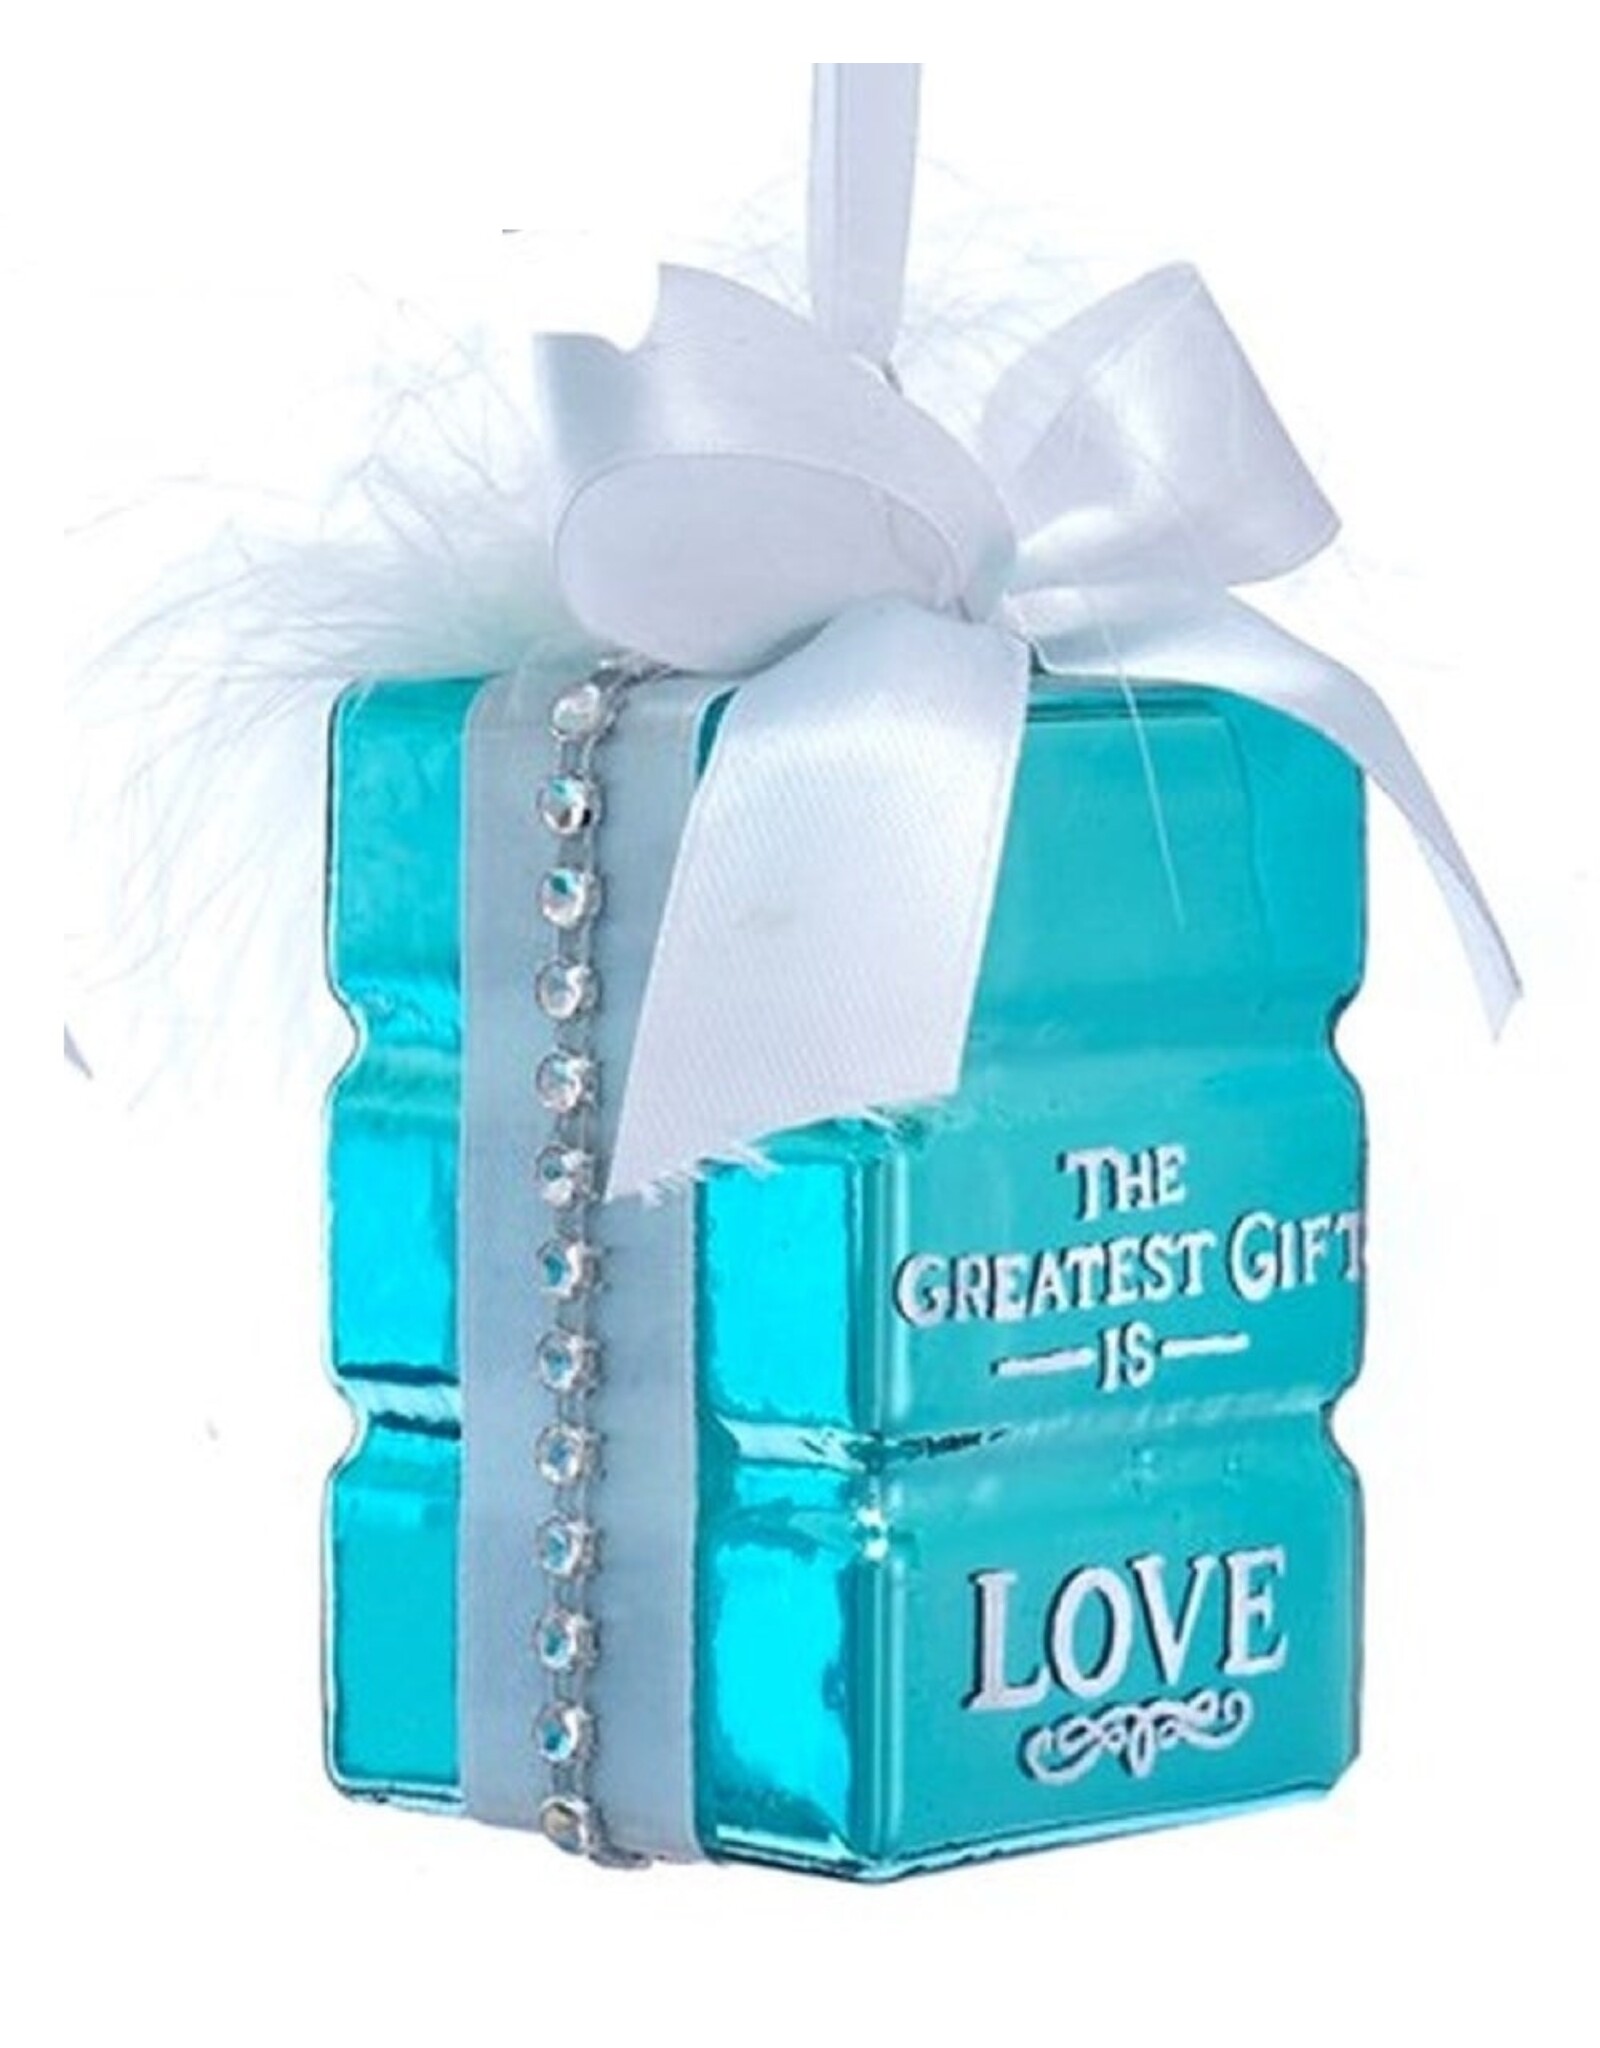 Kurt Adler Glass Tiffany Style Gift Box Ornaments W Sentiment LOVE